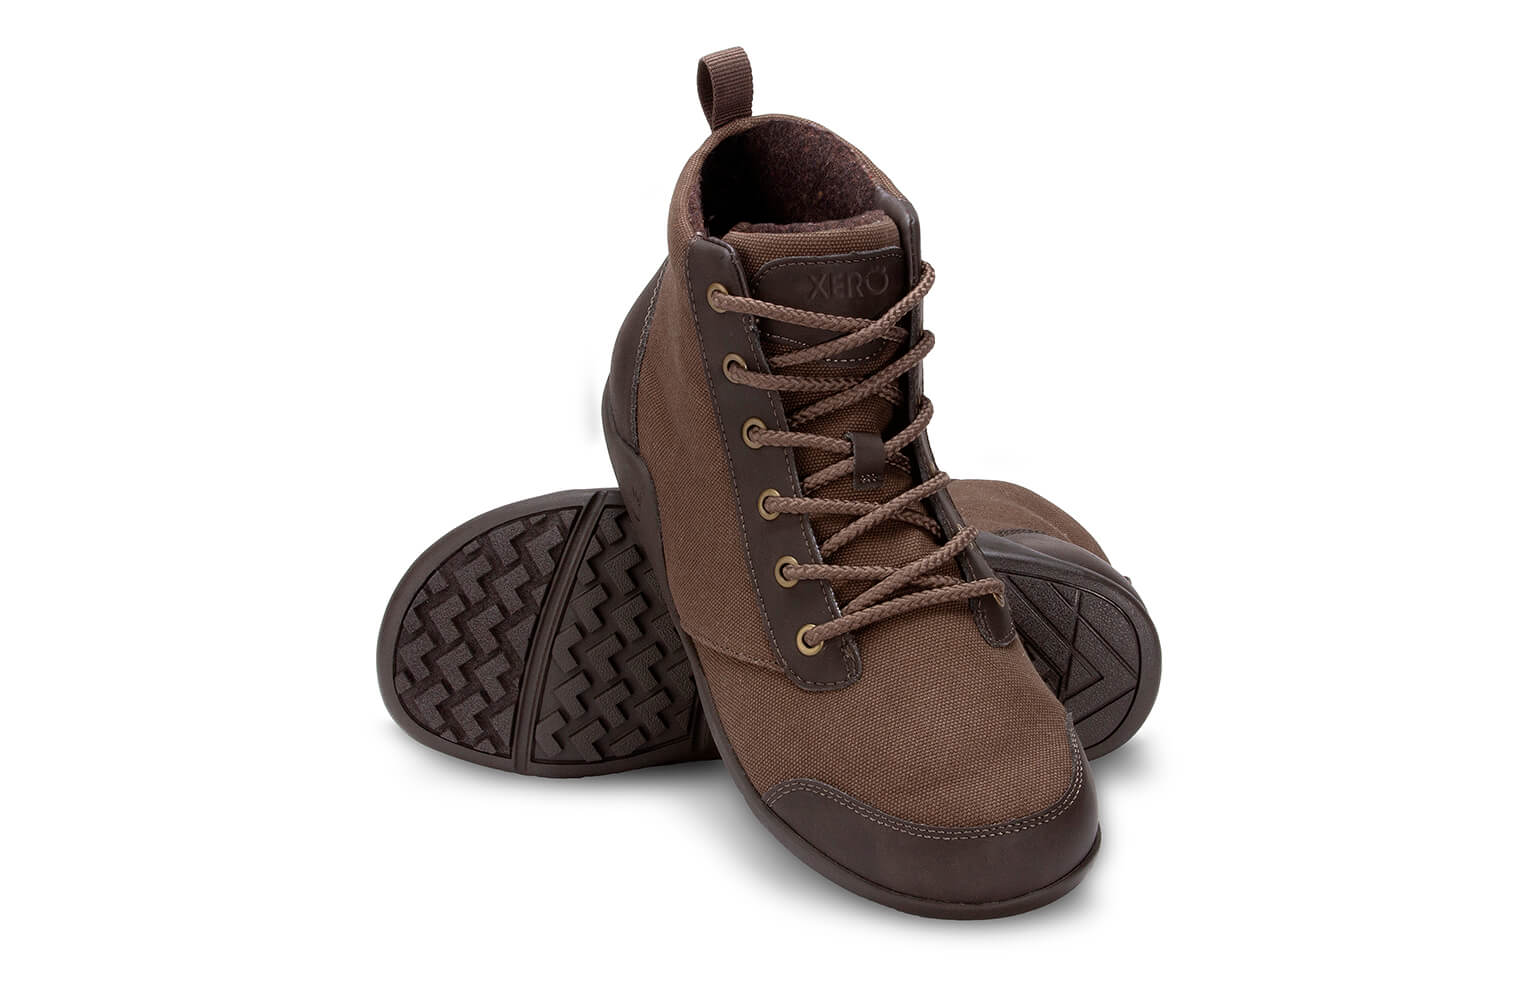 Xero Shoes Denver Leather Brown men's boots - Mugavik Barefoot